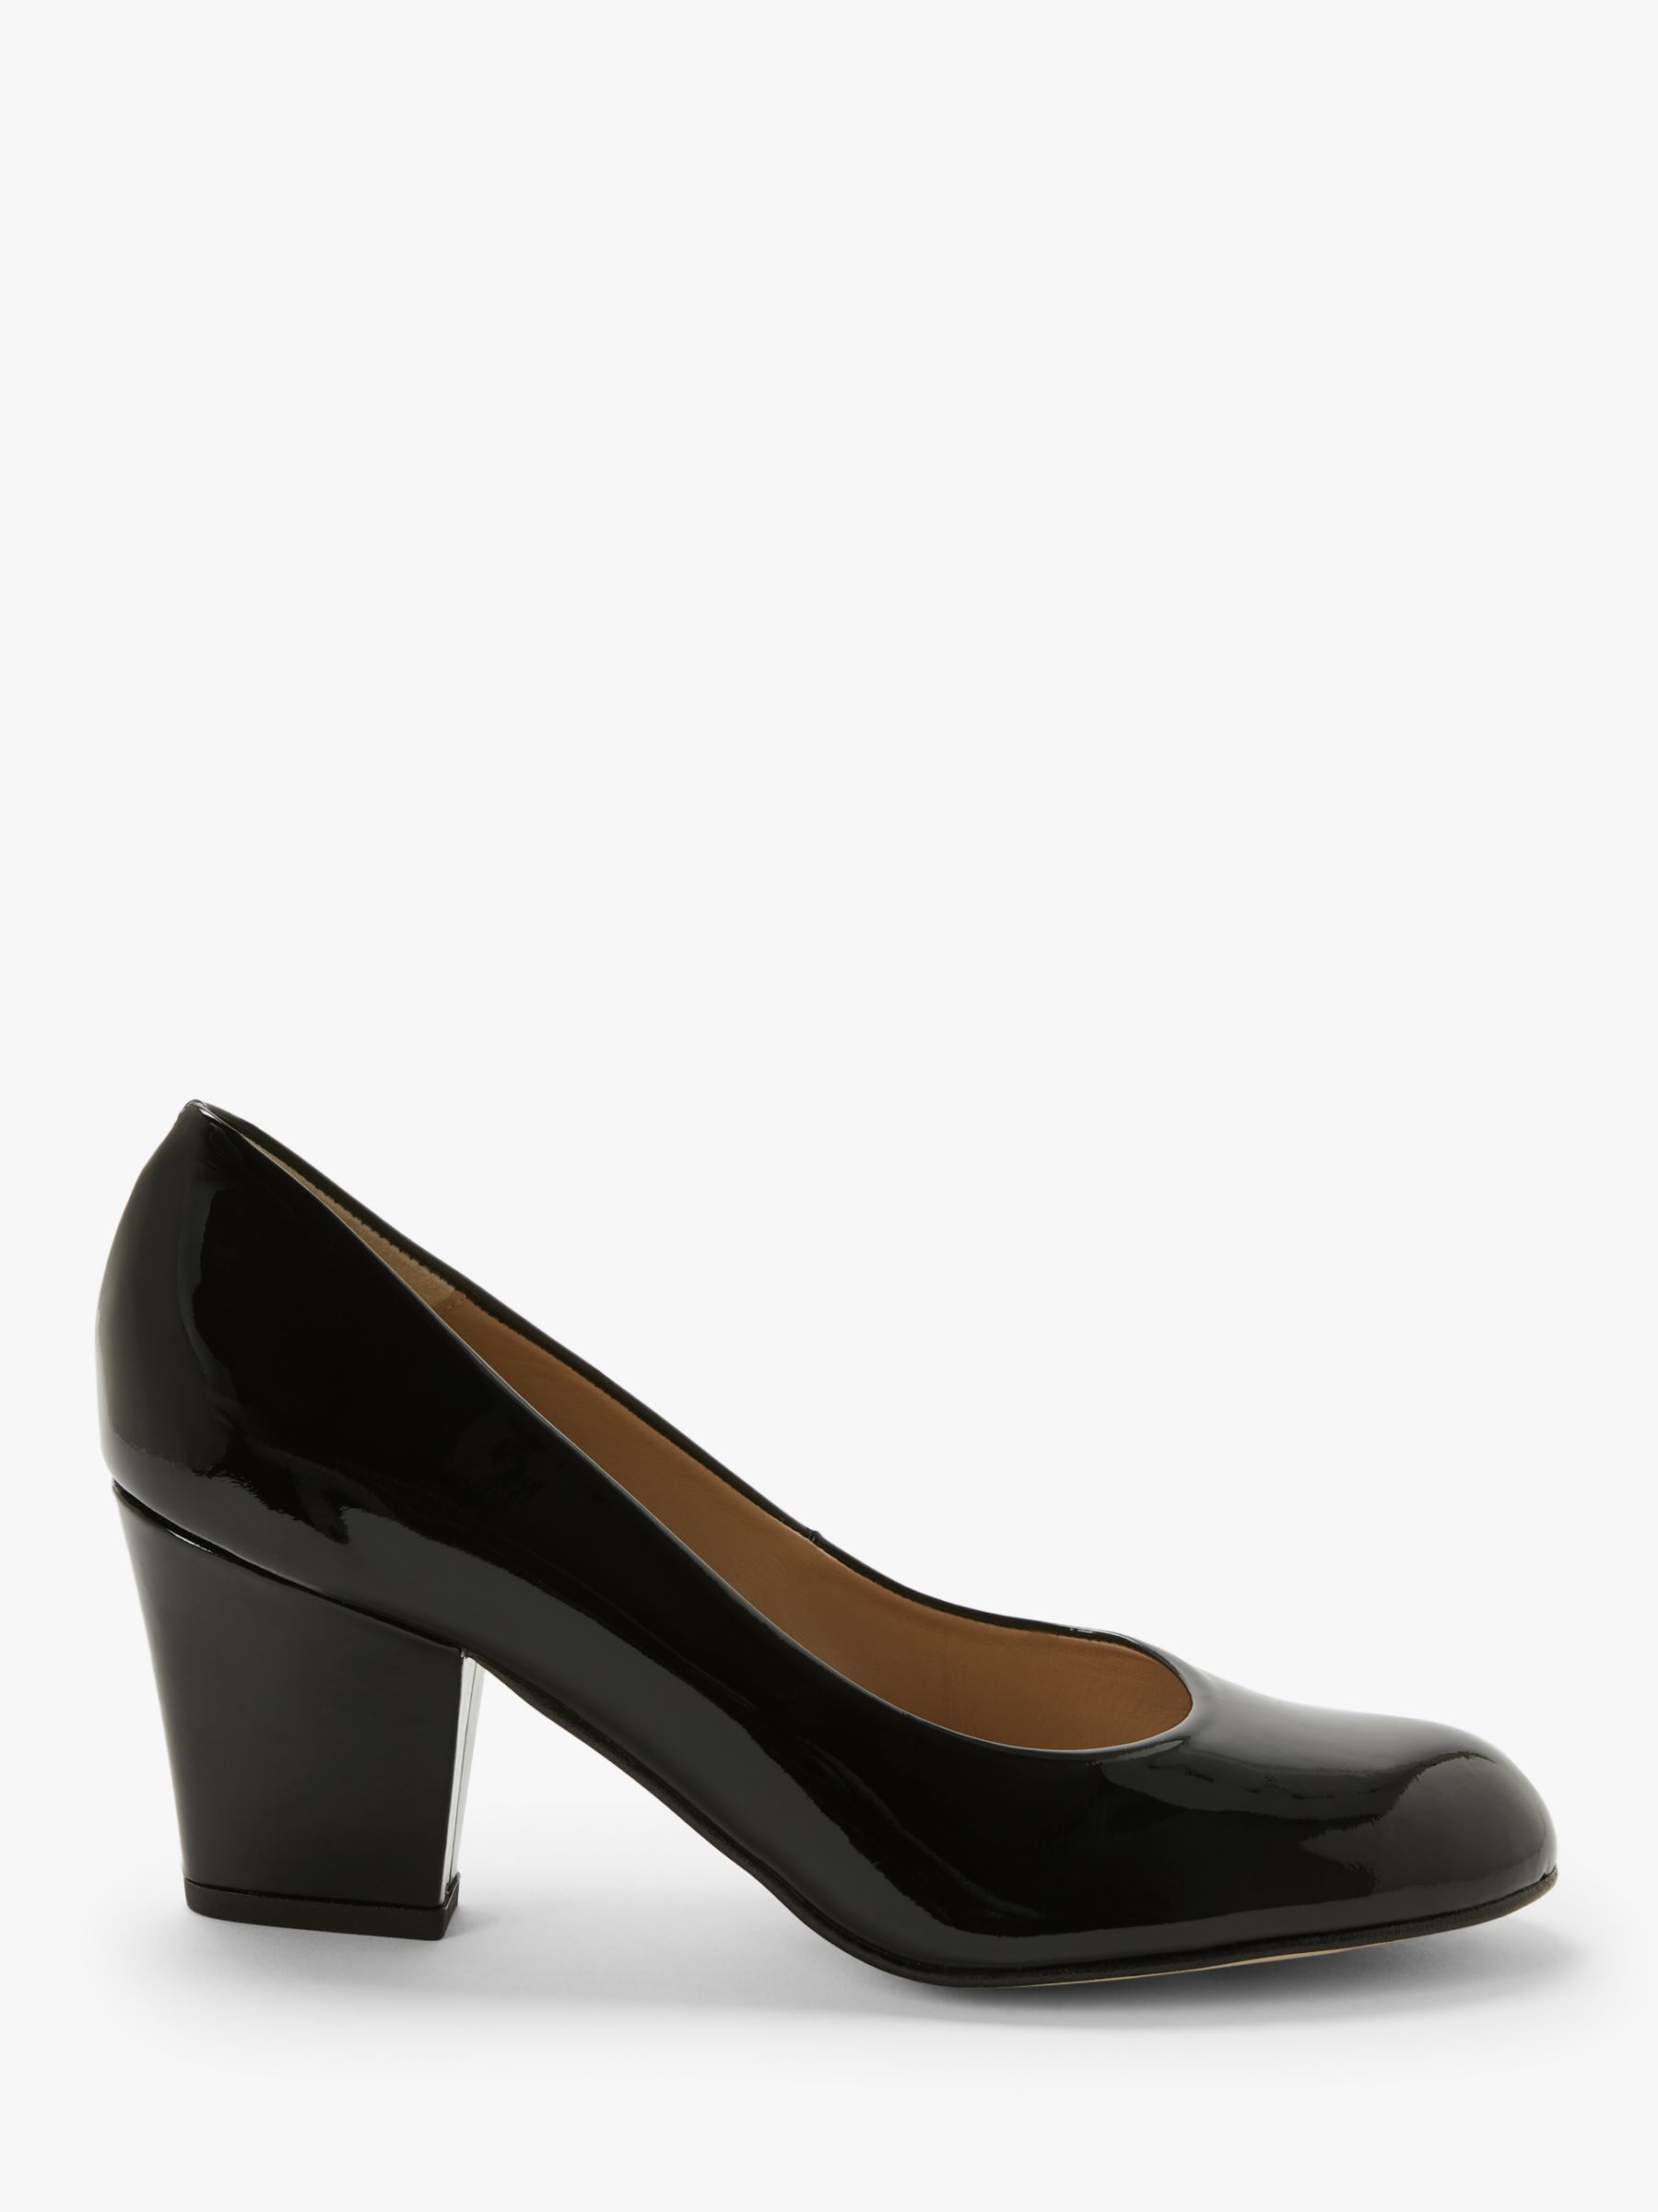 John Lewis & Partners Alma Leather Block Heel Court Shoes, Black